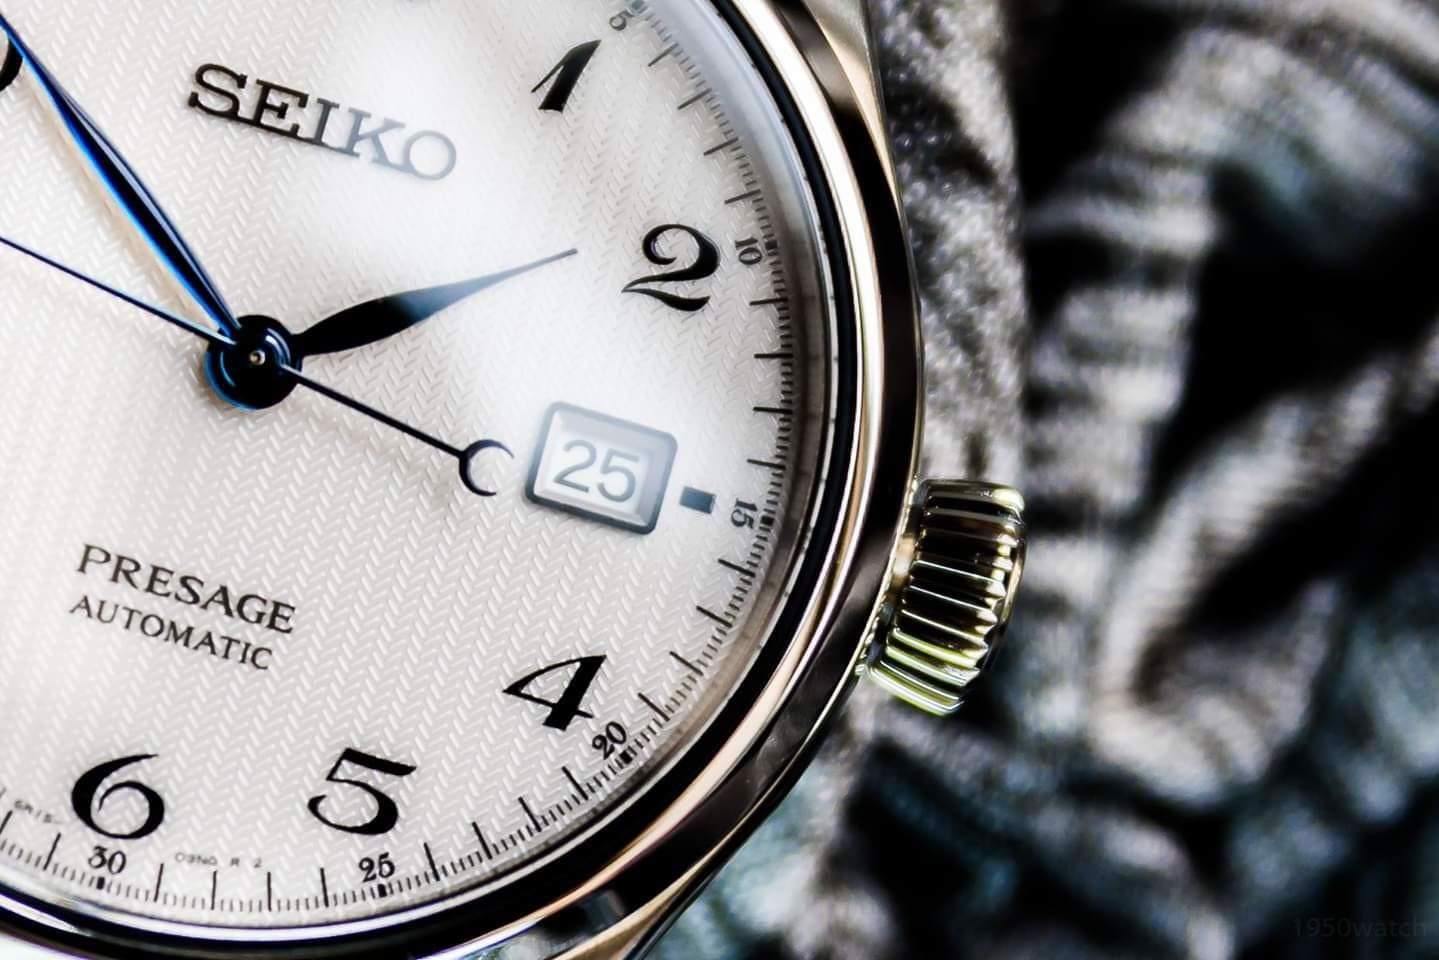 Seiko JAPAN Made Presage Karesansui White Men's Stainless Steel Watch SPB063J1 - Diligence1International